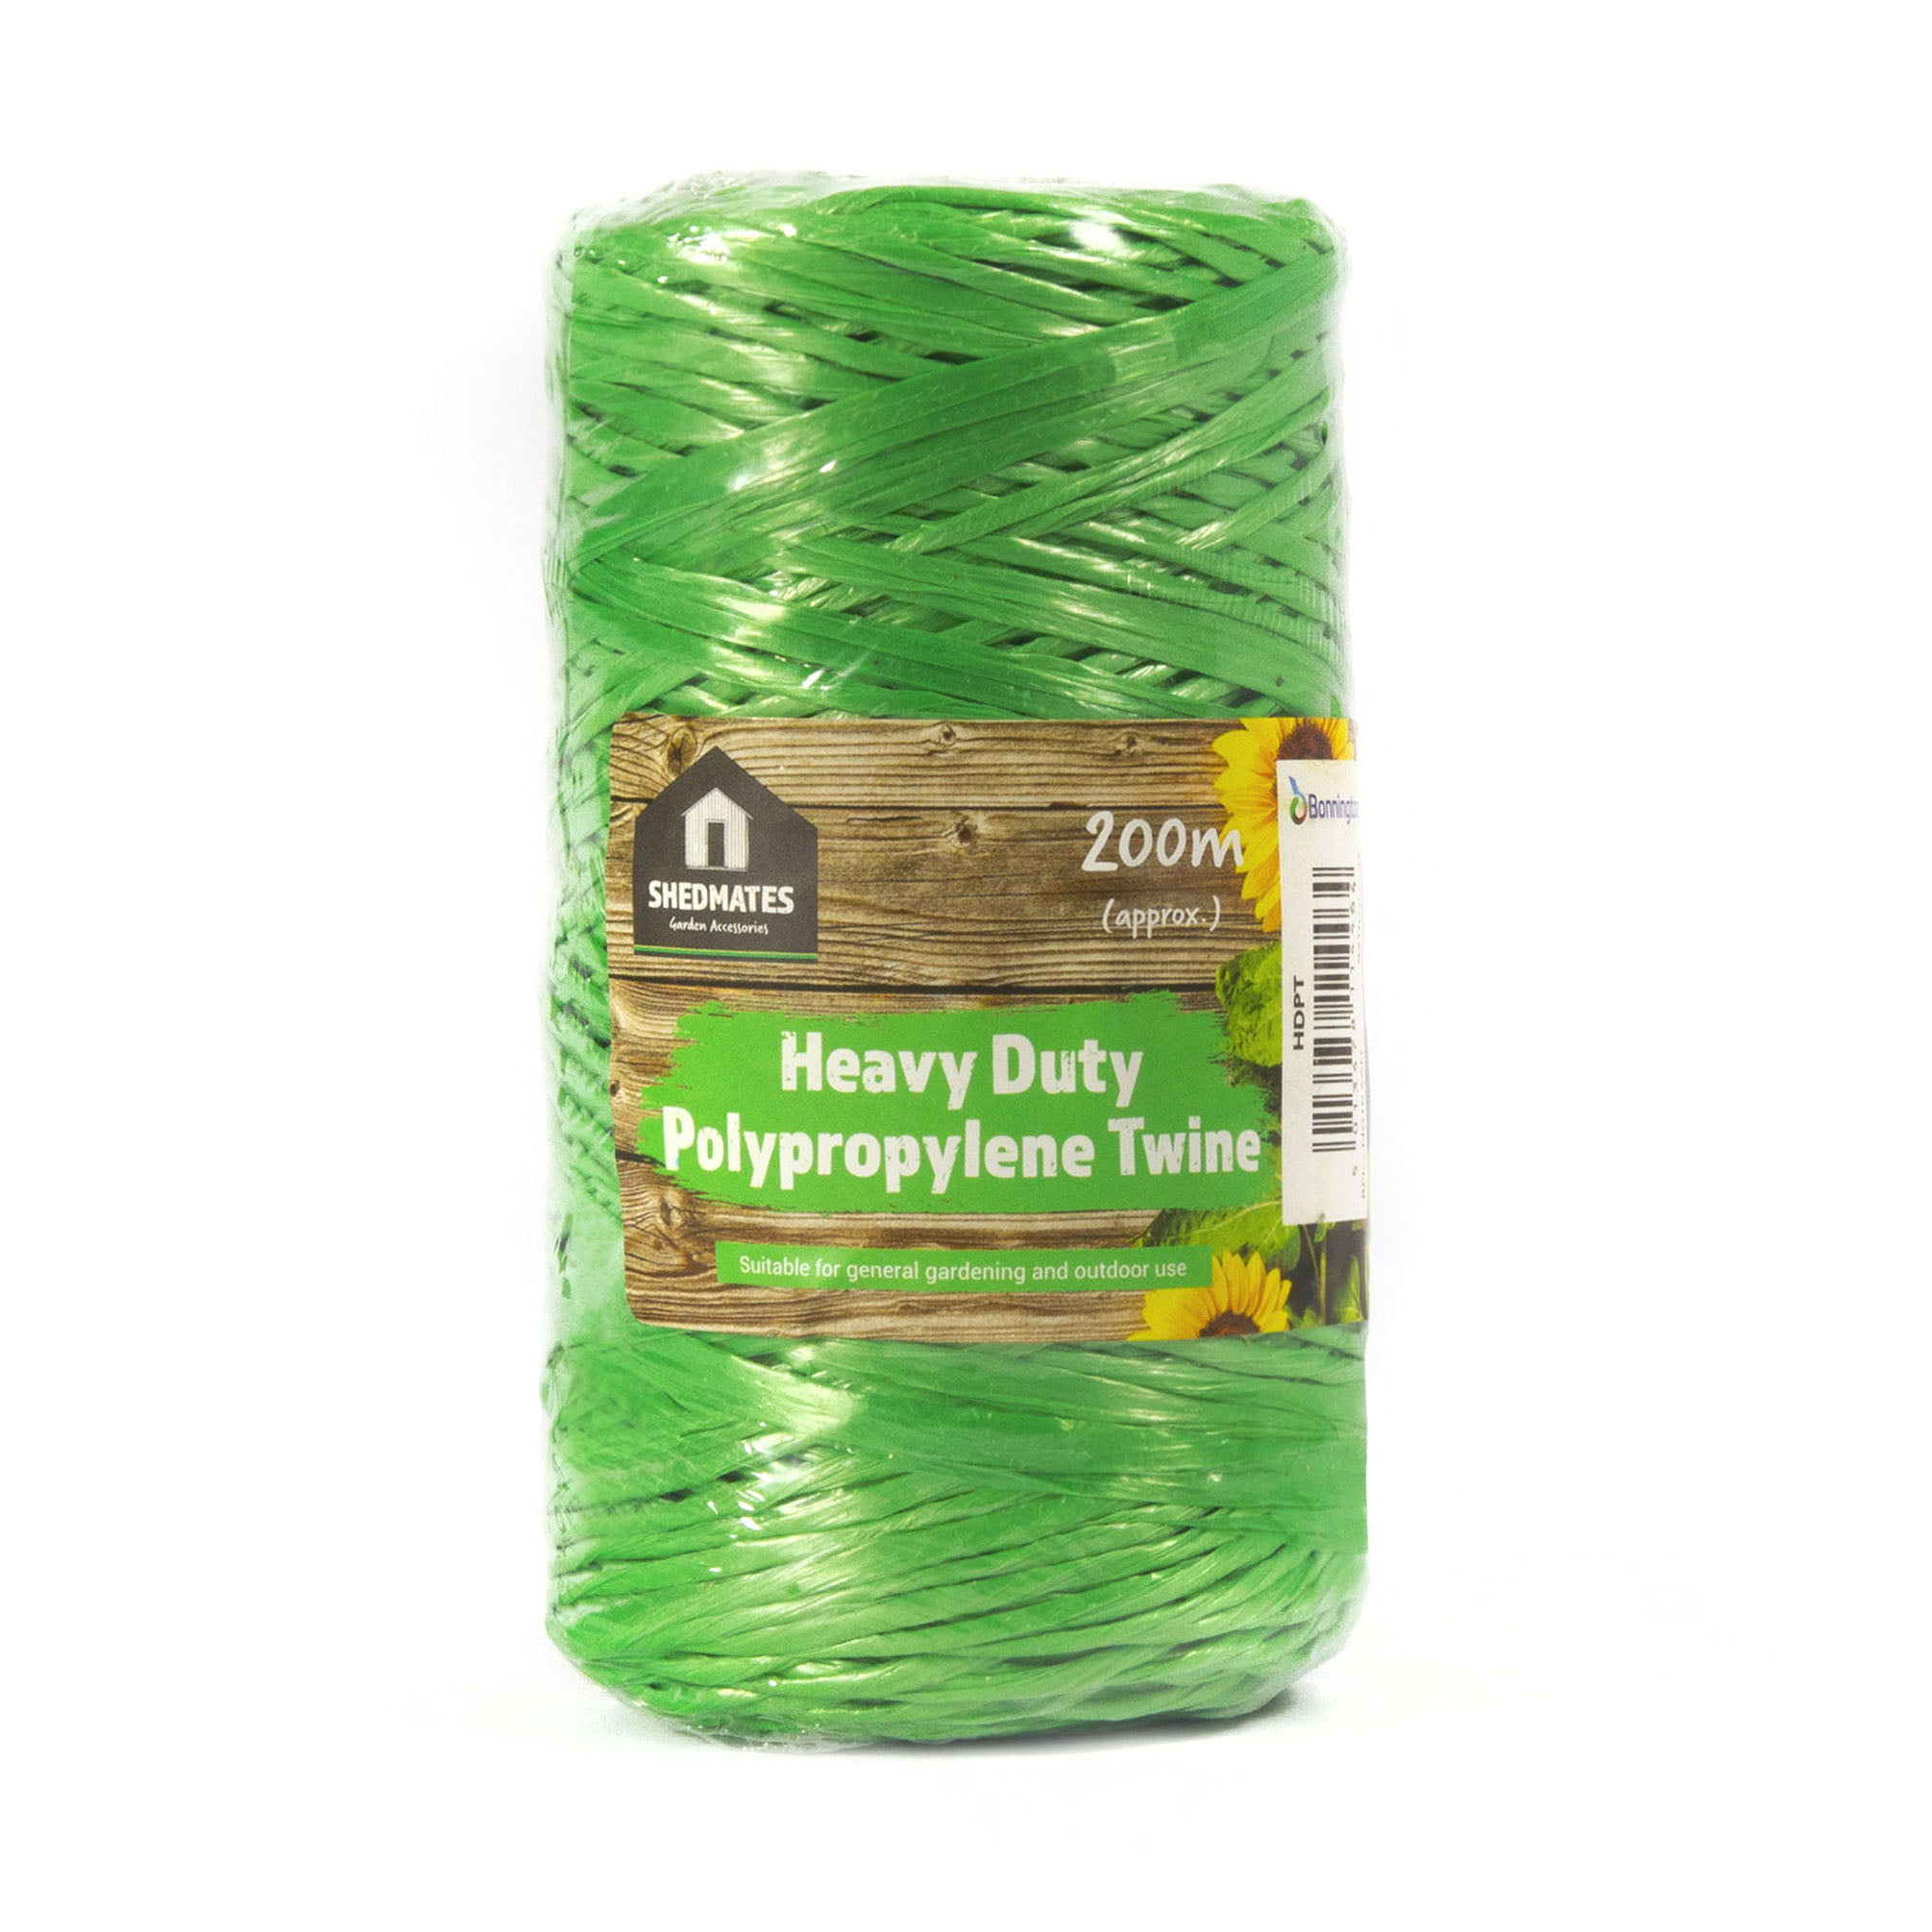 ShedMates Heavy Duty Polypropylene Twine (200m) - Green Box Wholesale